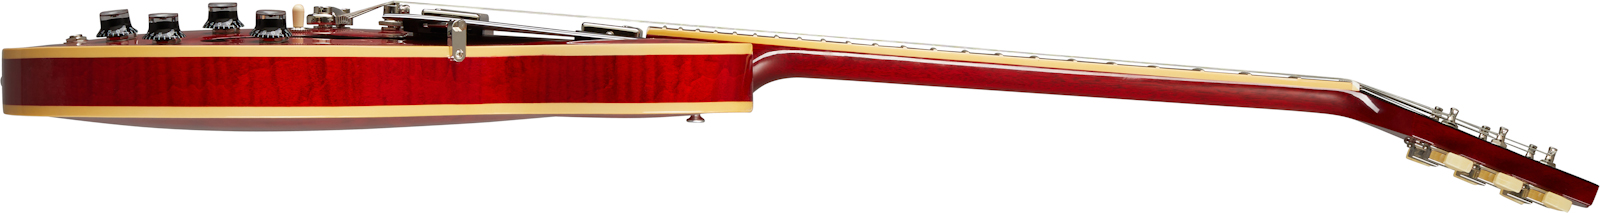 Gibson Es-335 Figured Original 2020 2h Ht Rw - Sixties Cherry - Semi-hollow electric guitar - Variation 2